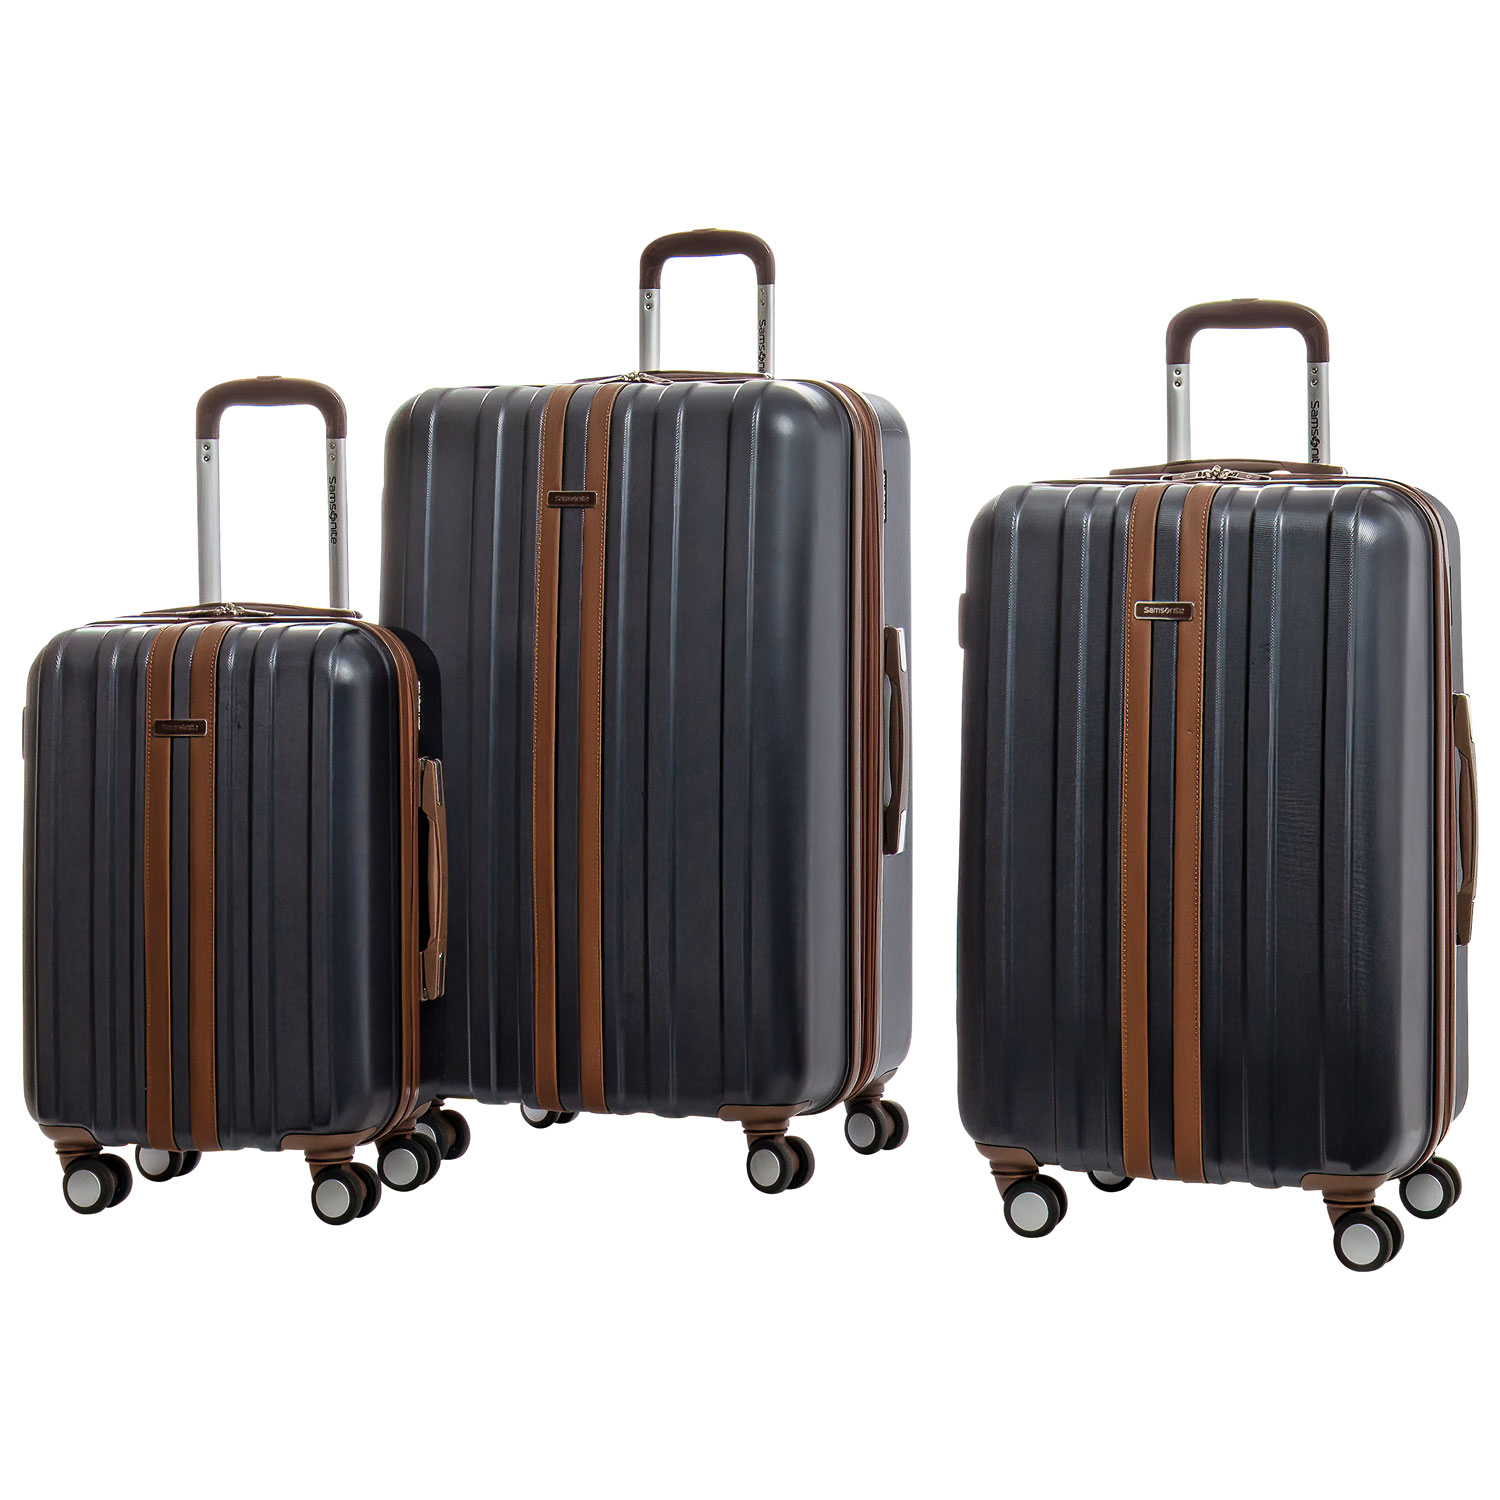 Samsonite Spectacular LTD 3-Piece Hard Side Expandable Luggage Set - Navy/Brown